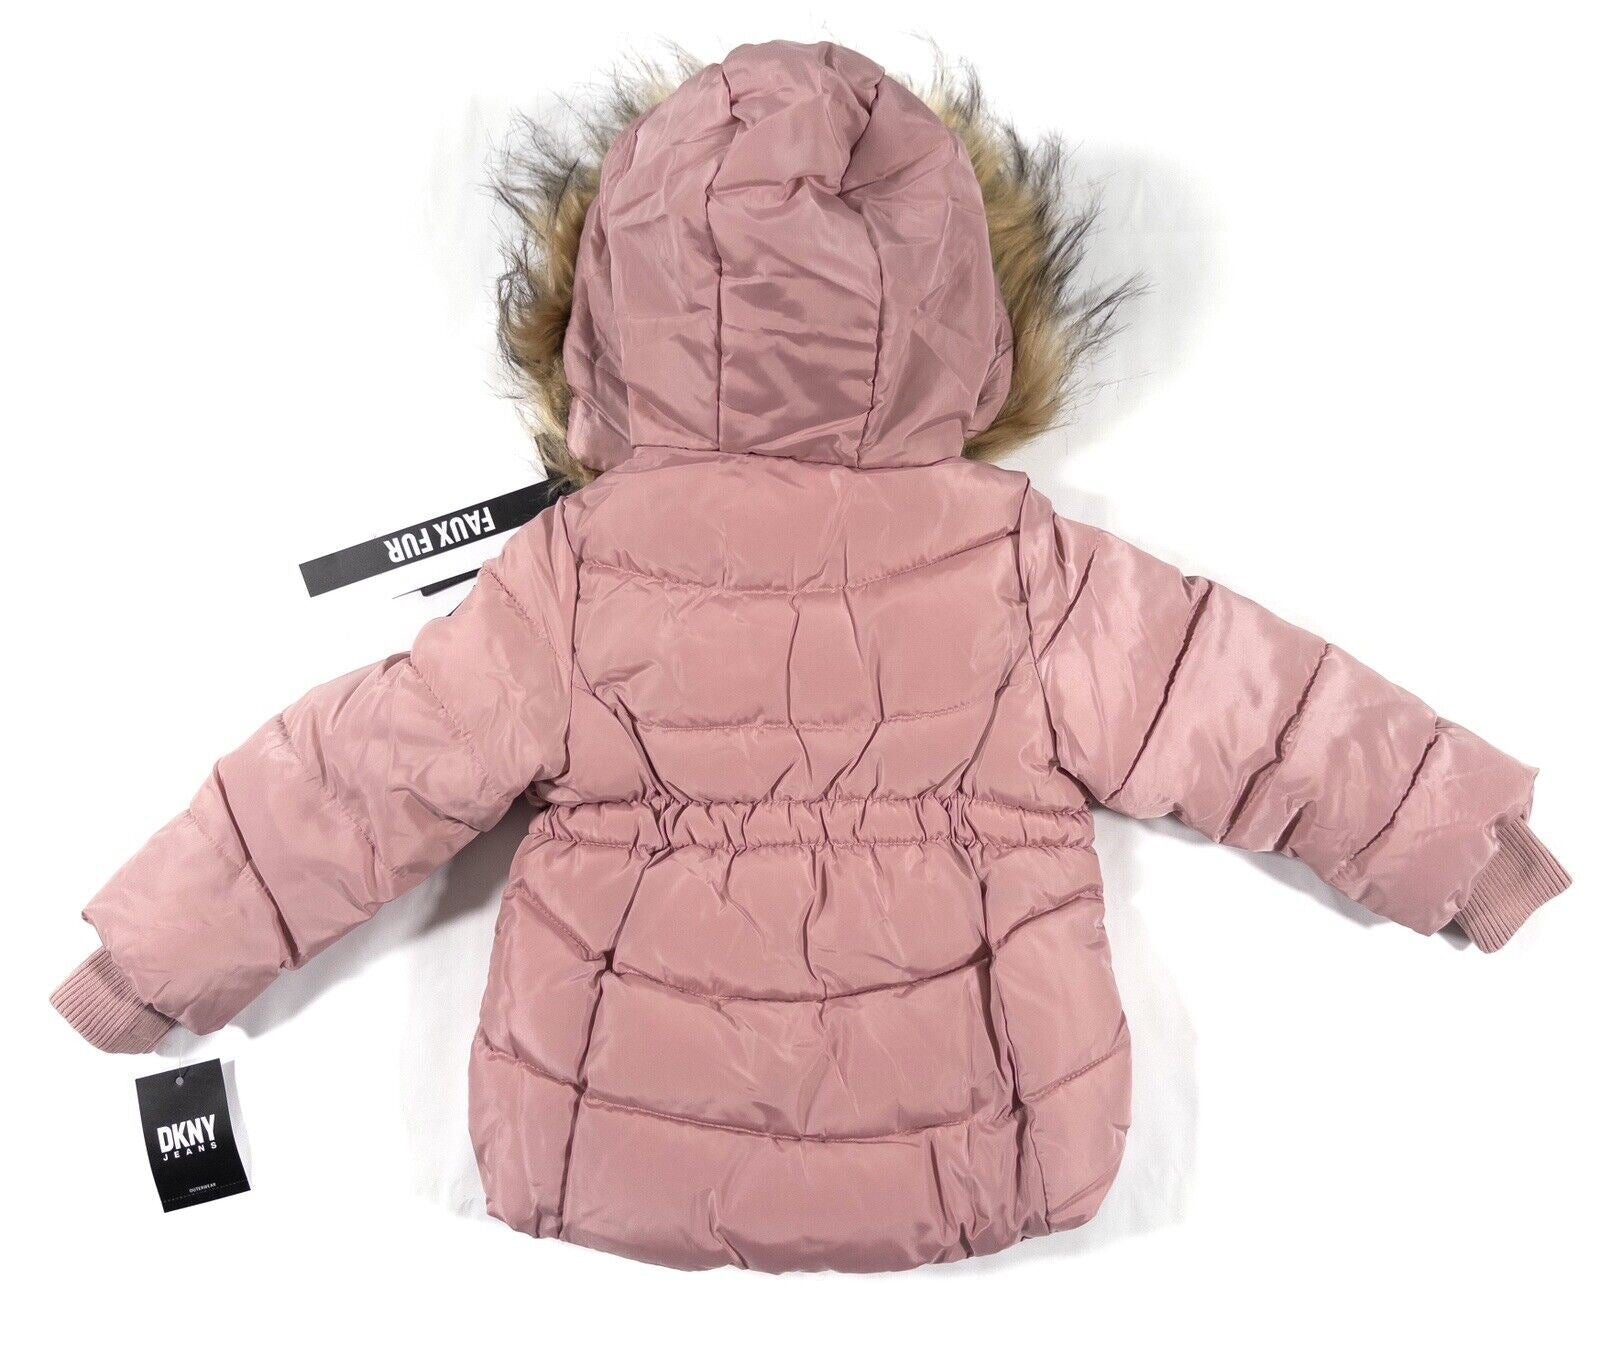 DKNY JEANS Infants Girls Pink Hooded Coat Size UK 18 Months